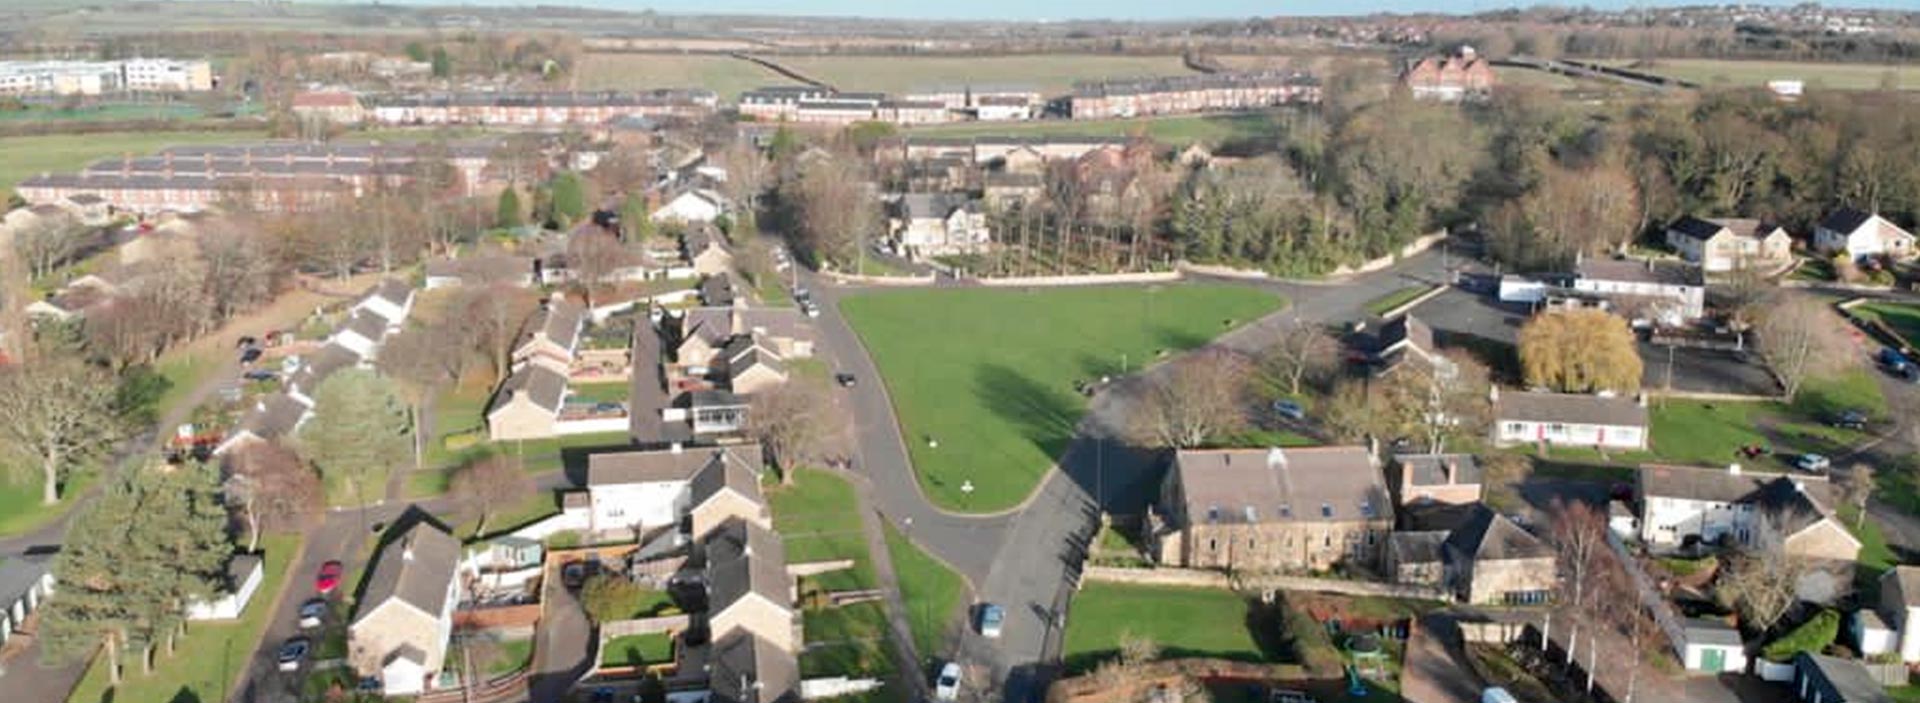 aerial view of Walbottle Village in spring